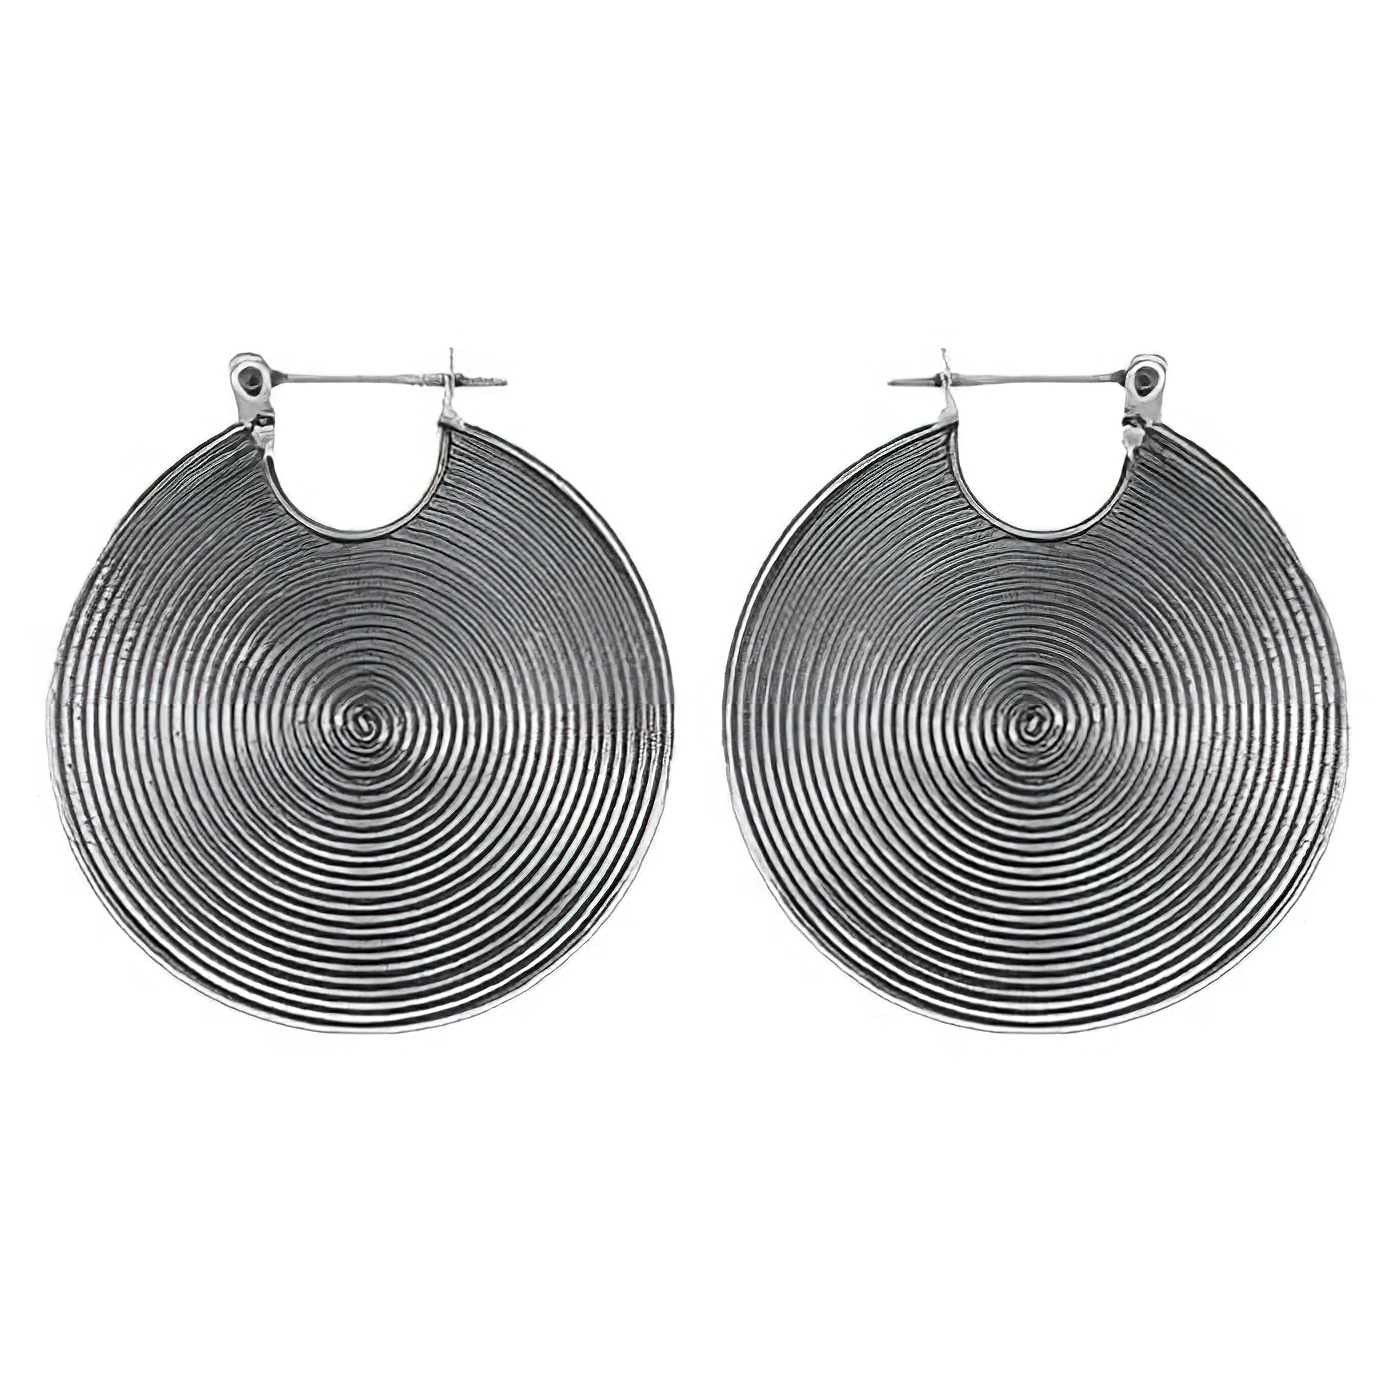 Spiral Hoops 31MM 925 Silver Earrings by BeYindi 